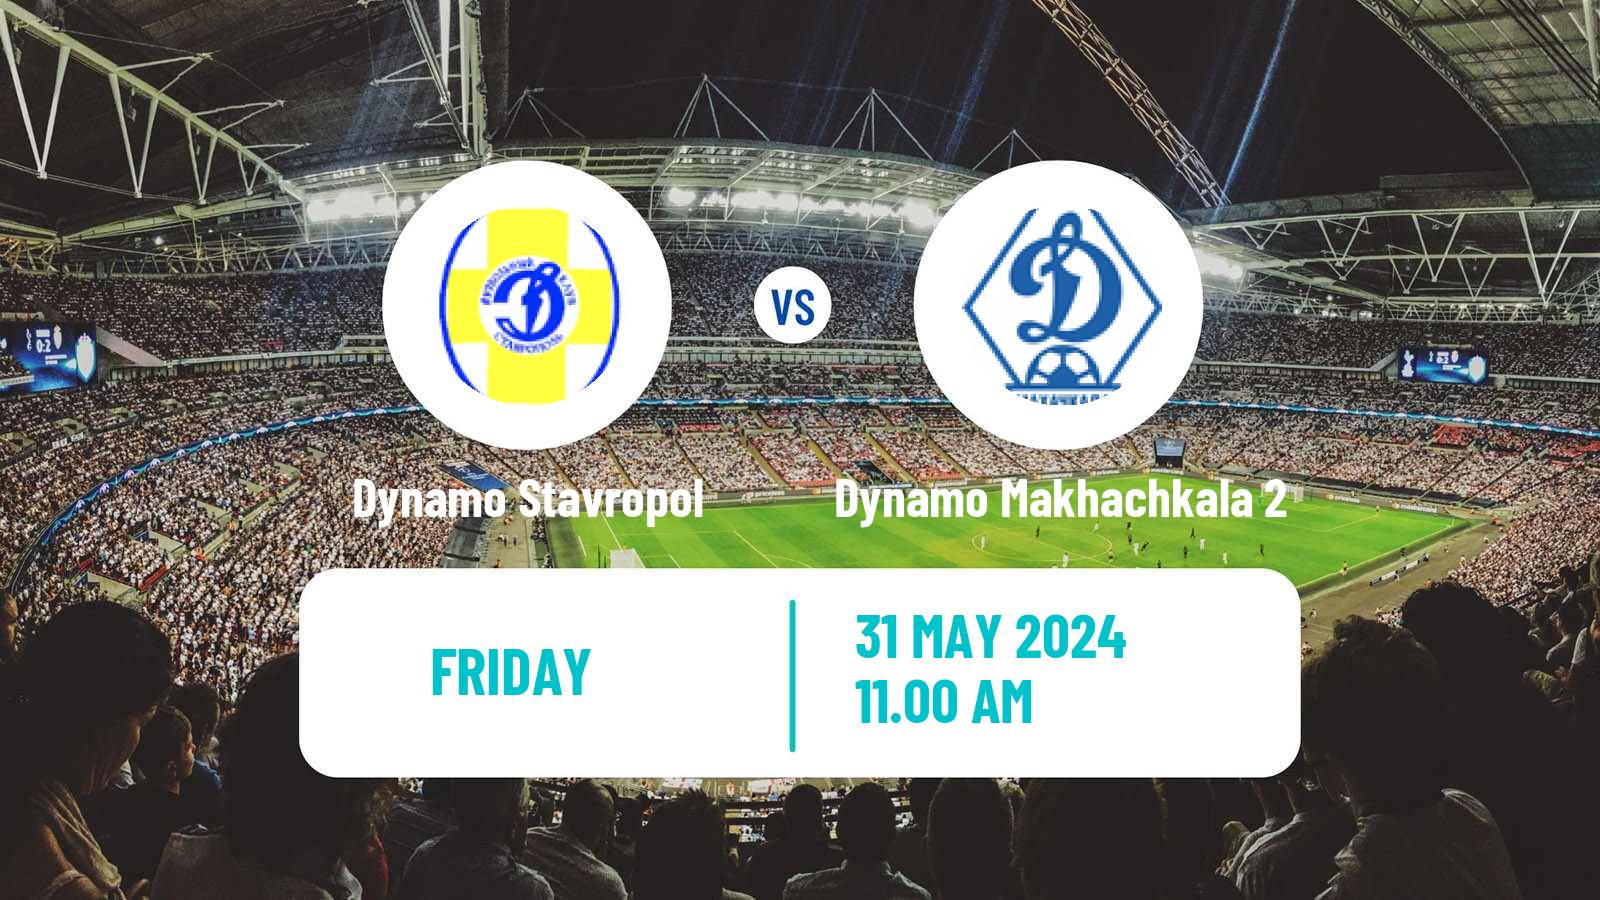 Soccer FNL 2 Division B Group 1 Dynamo Stavropol - Dynamo Makhachkala 2